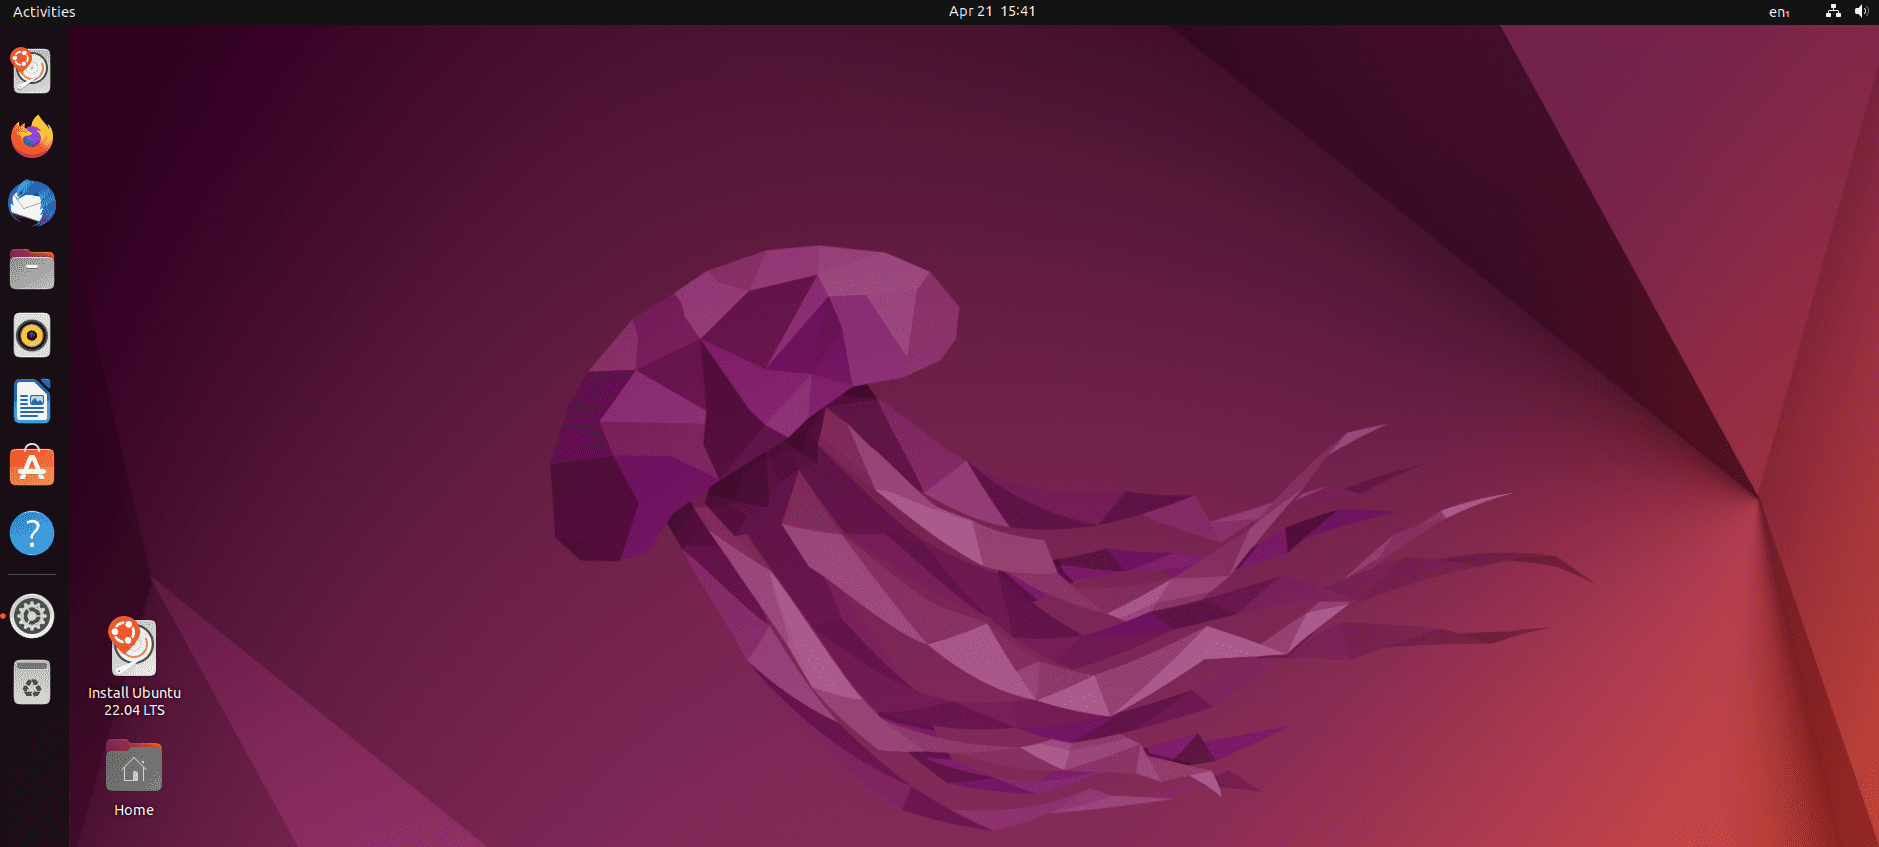 Ubuntu 22.04 lts desktop